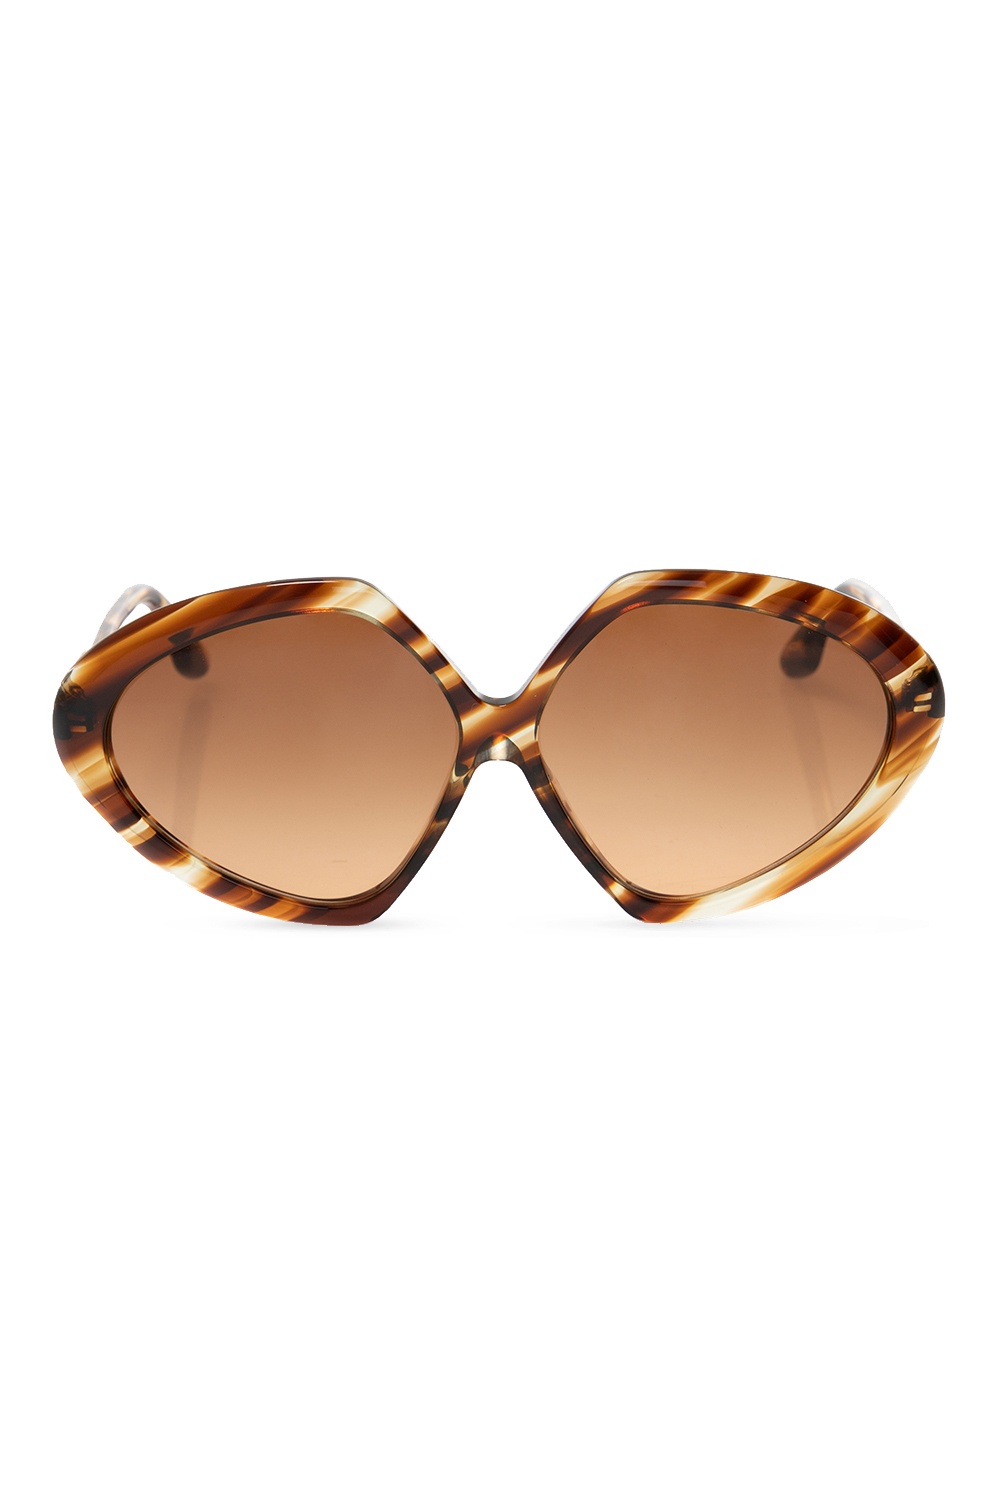 Victoria Beckham RB3747 153 71 50MM Matte Black Sunglasses Grey Gradient Lens